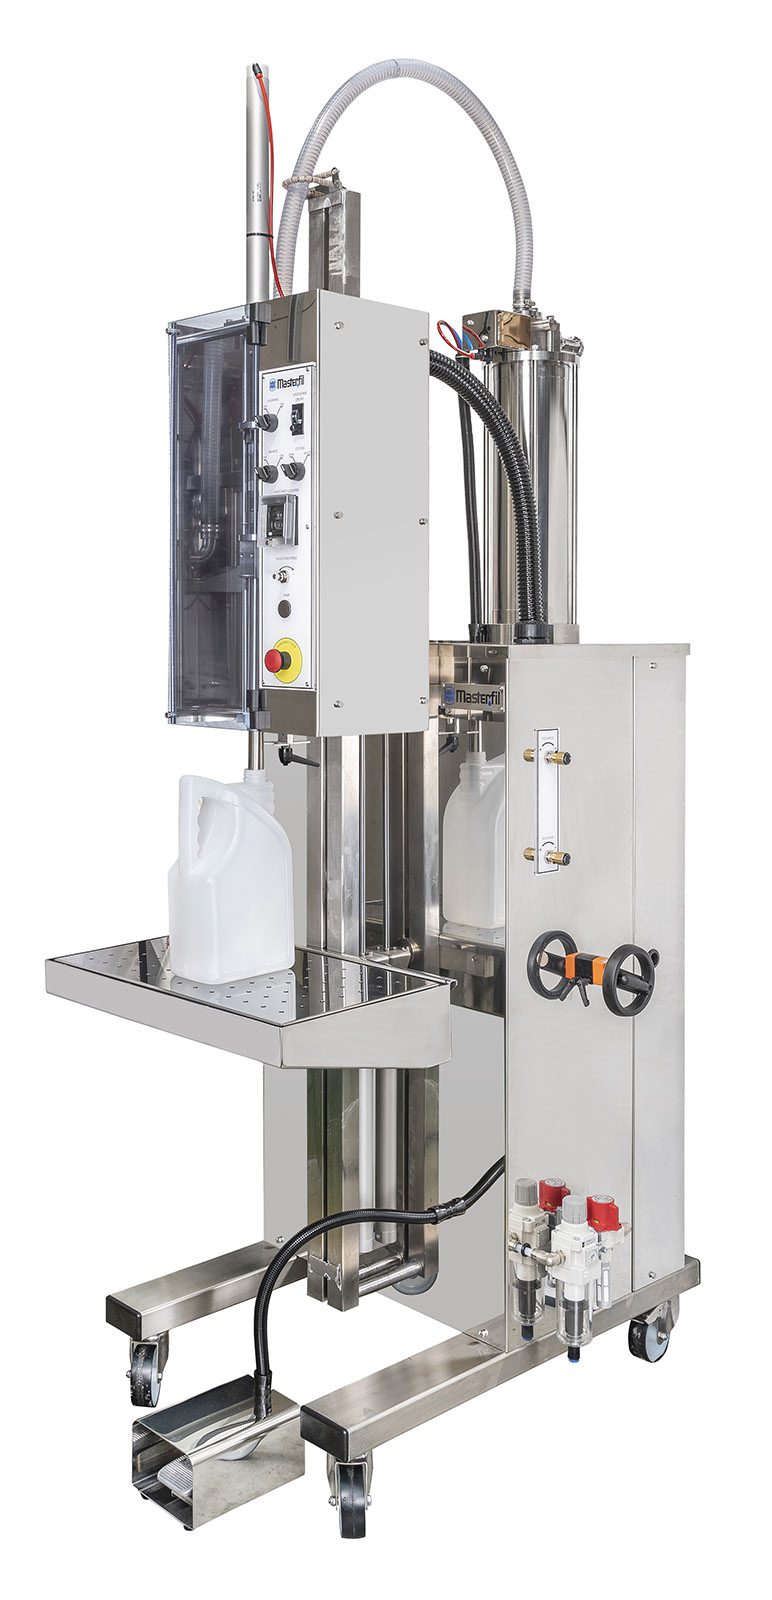 Adelphi Masterfil S5000-S Volumetric Semi-Automatic Filling Machine for Chemicals